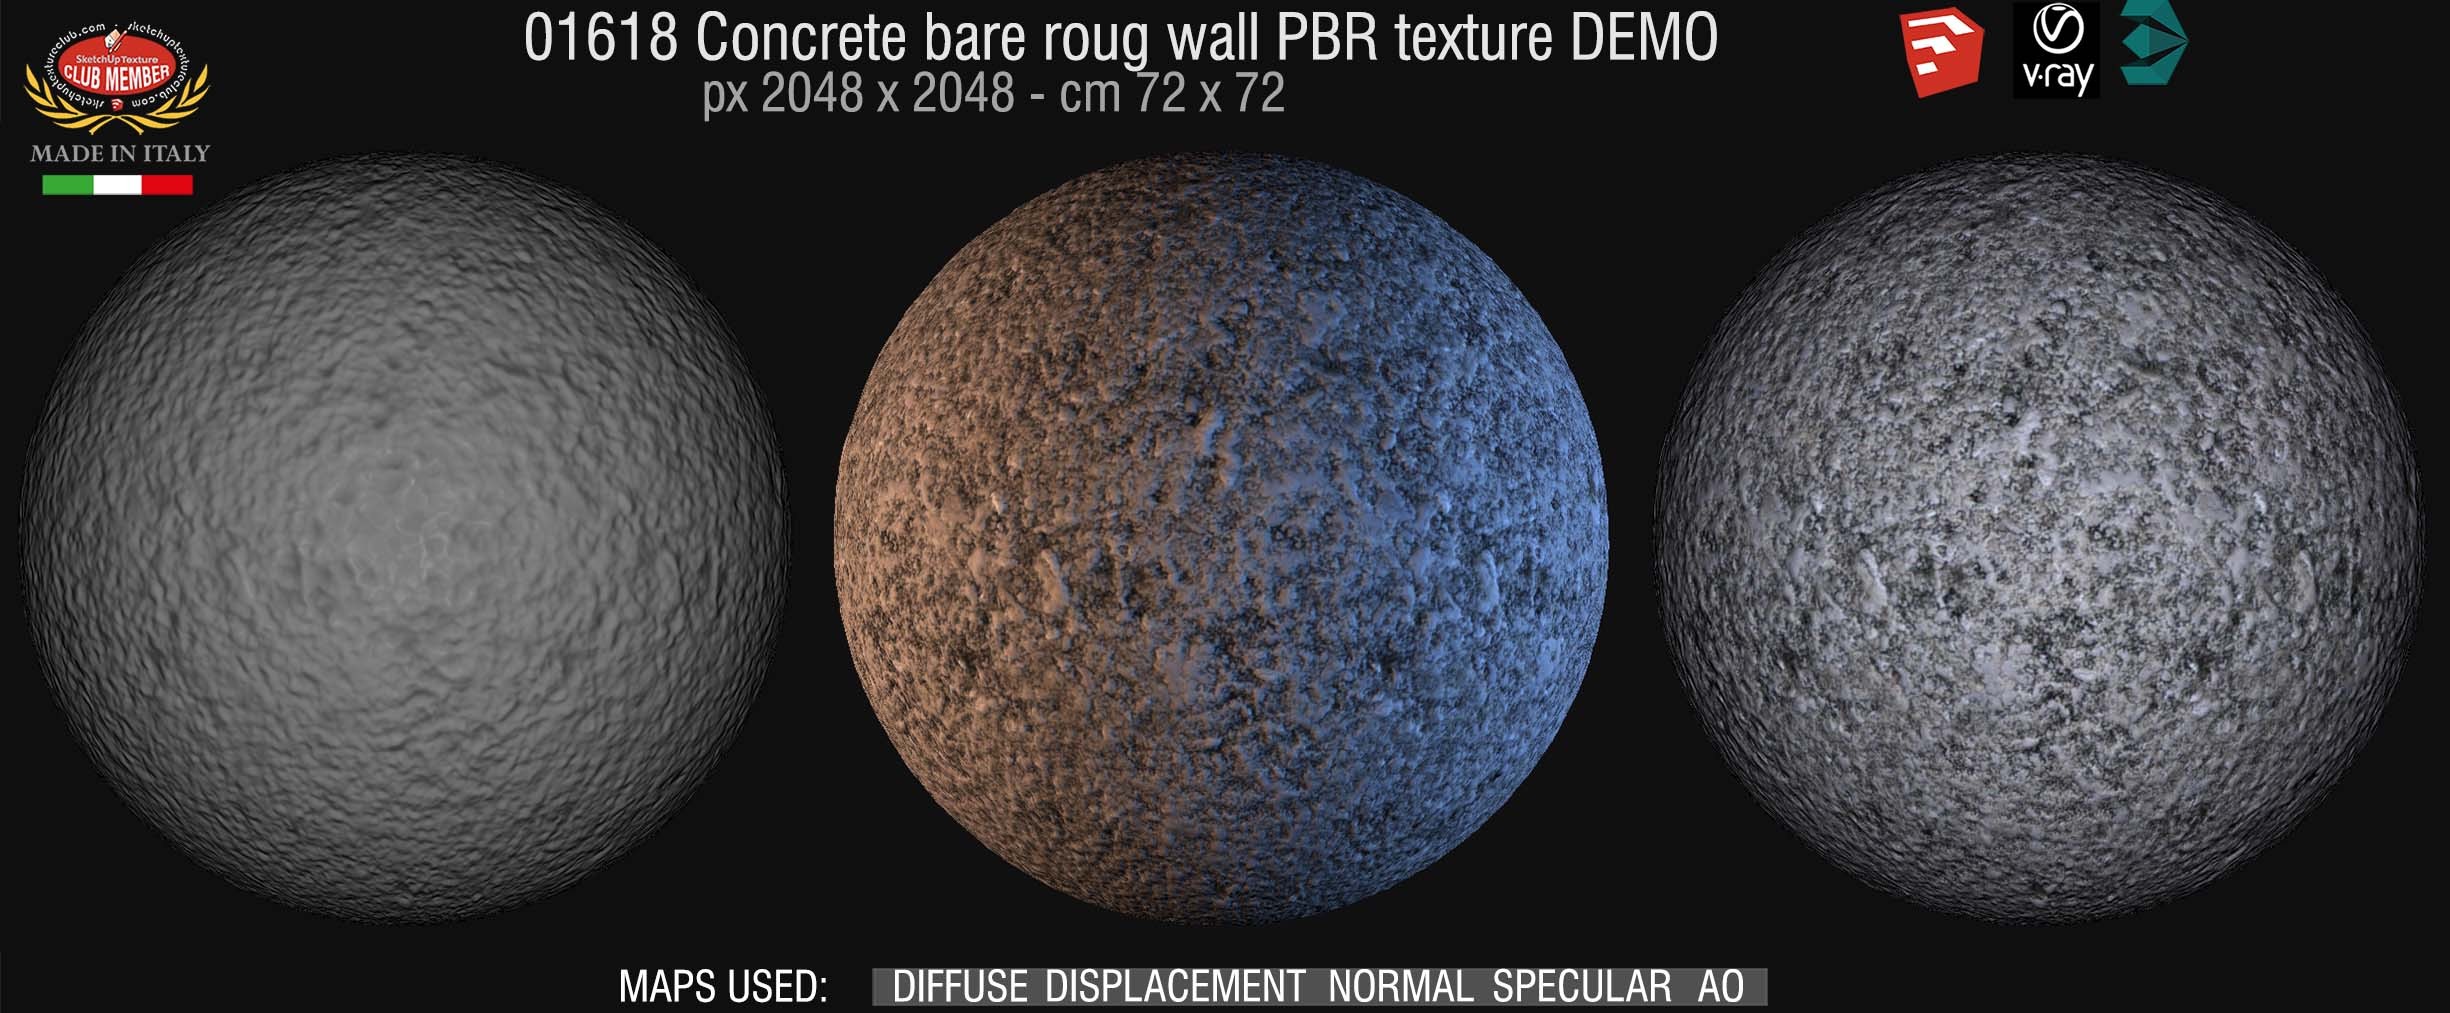 01618 concrete bare rough wall PBR texture seamless DEMO